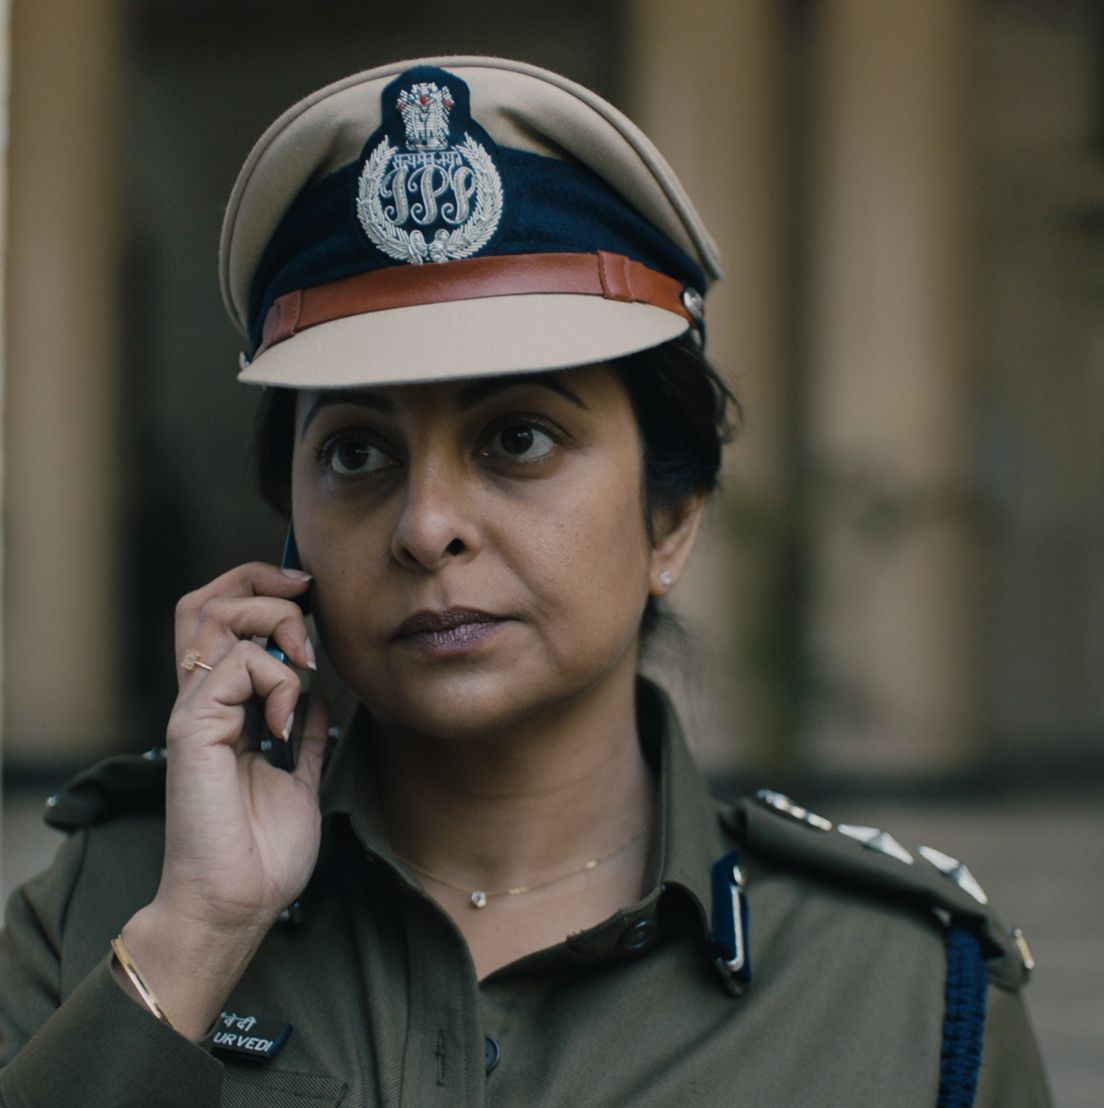 Xxx Mom Son Rape Brazer - The True Story Behind Netflix's 'Delhi Crime' Is Absolutely Horrific